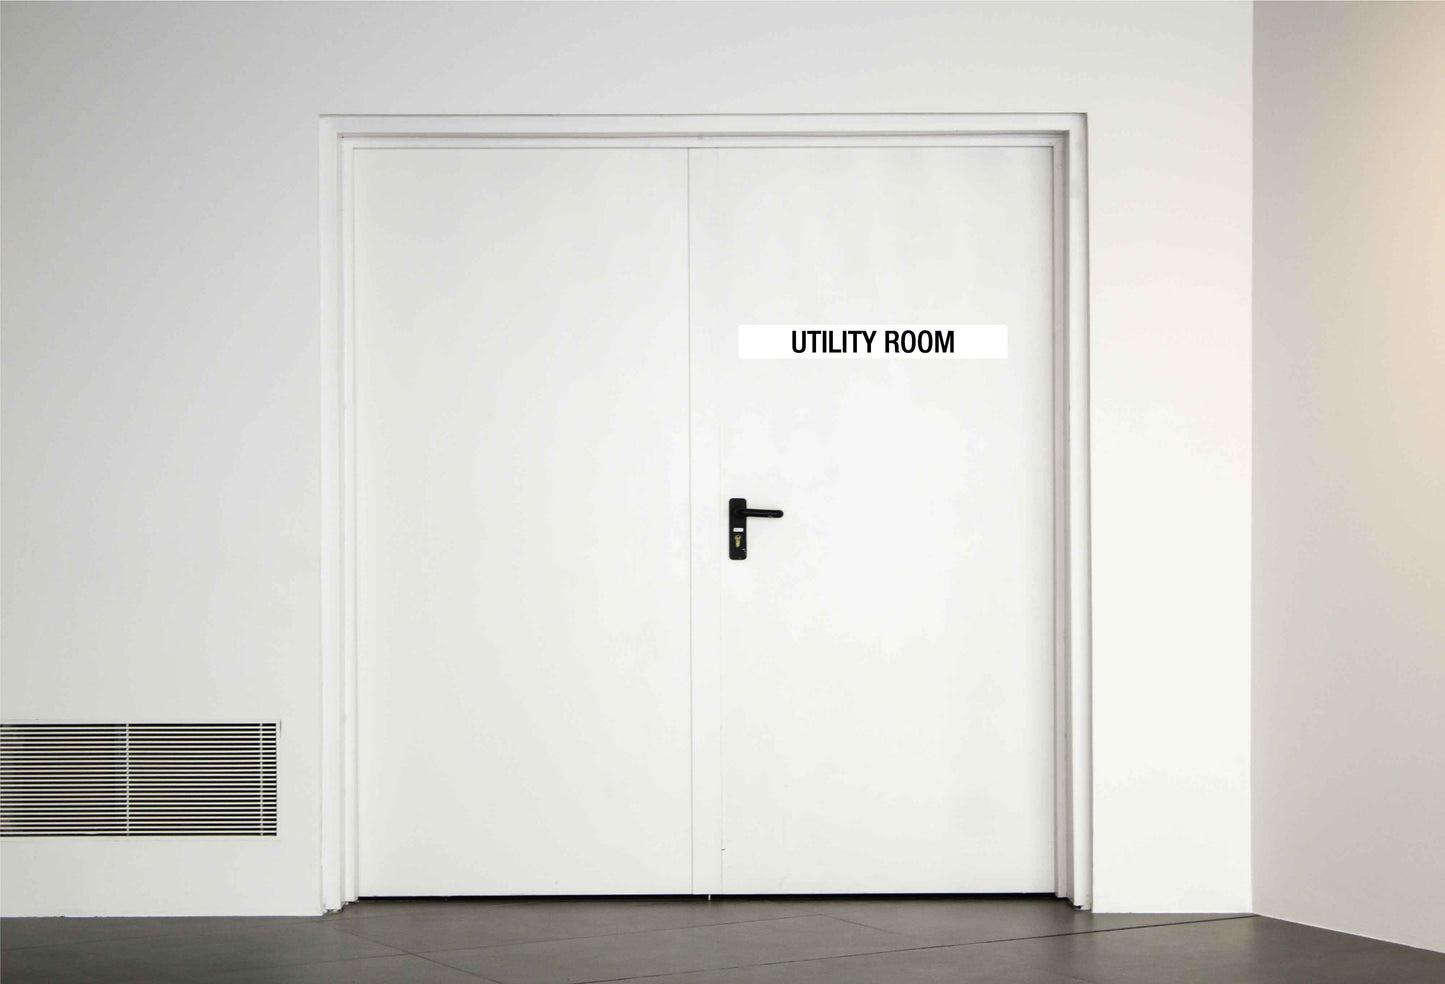 Bin Room - Statutory Sign